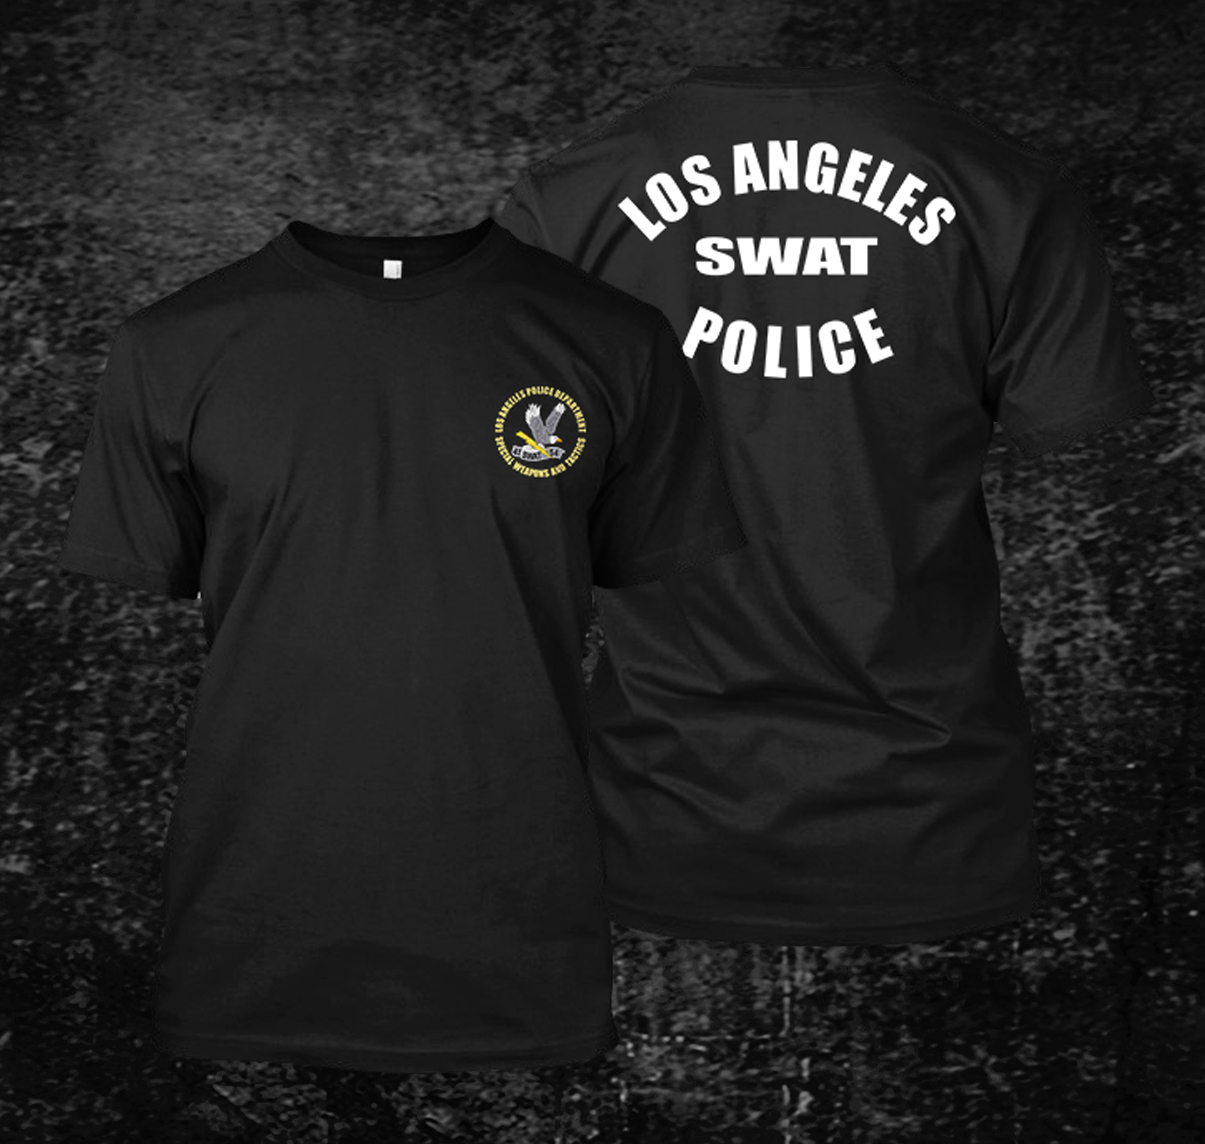 Dejavain Texas Rangers Division TxDPS Police Department SWAT - Custom T-Shirt Tee Size S-5xl Black Navy White